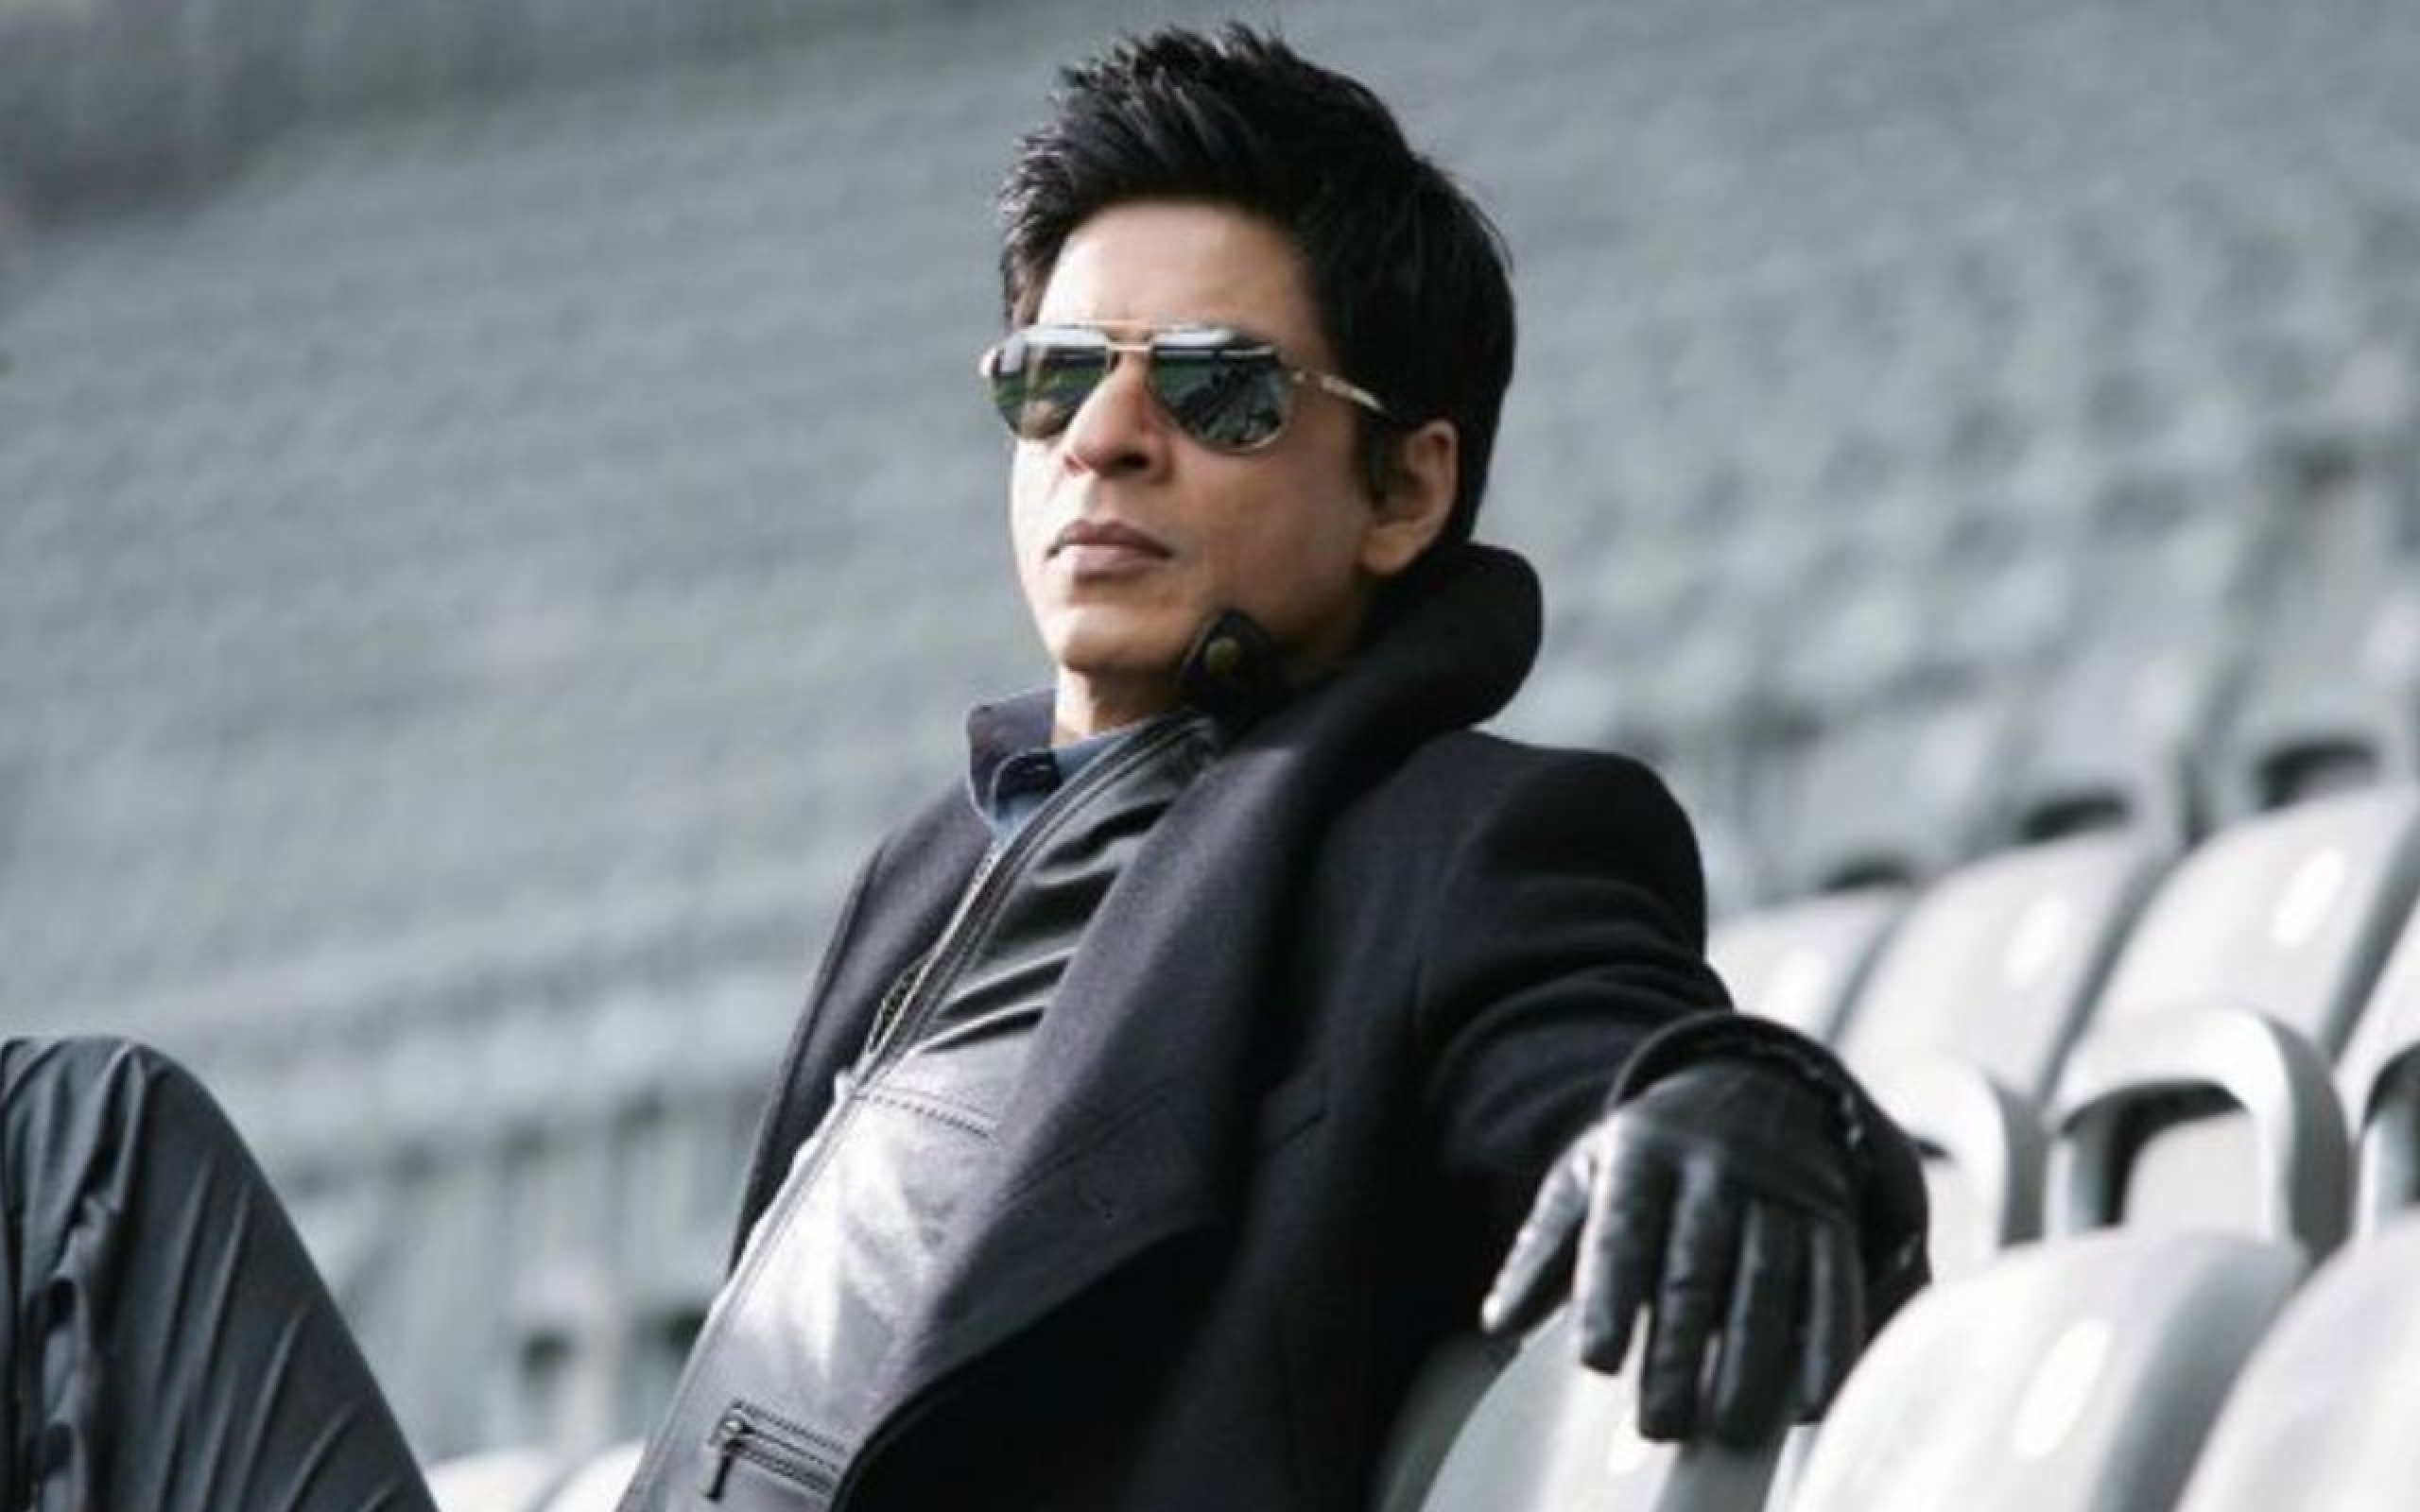 Shahrukh Khan Pictures | Download Free Desktop Wallpaper Images ...